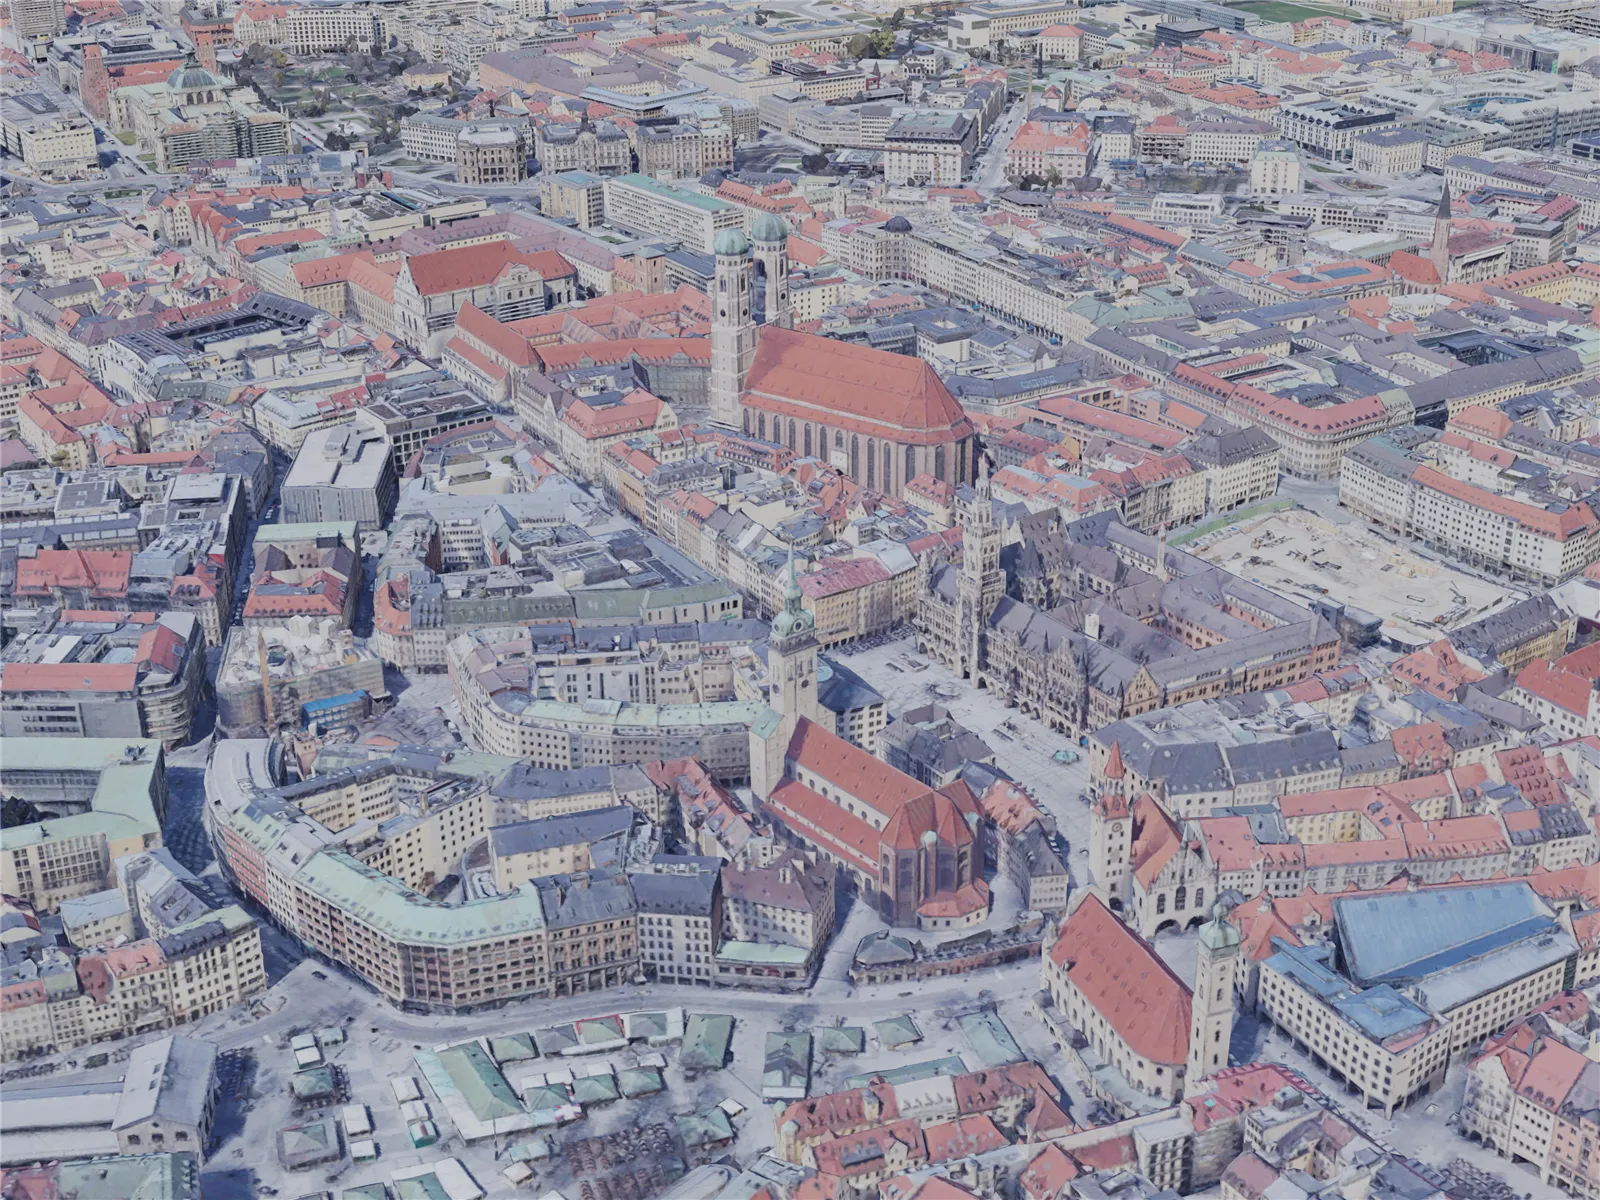 Munich City, Germany (2019) 3D Model